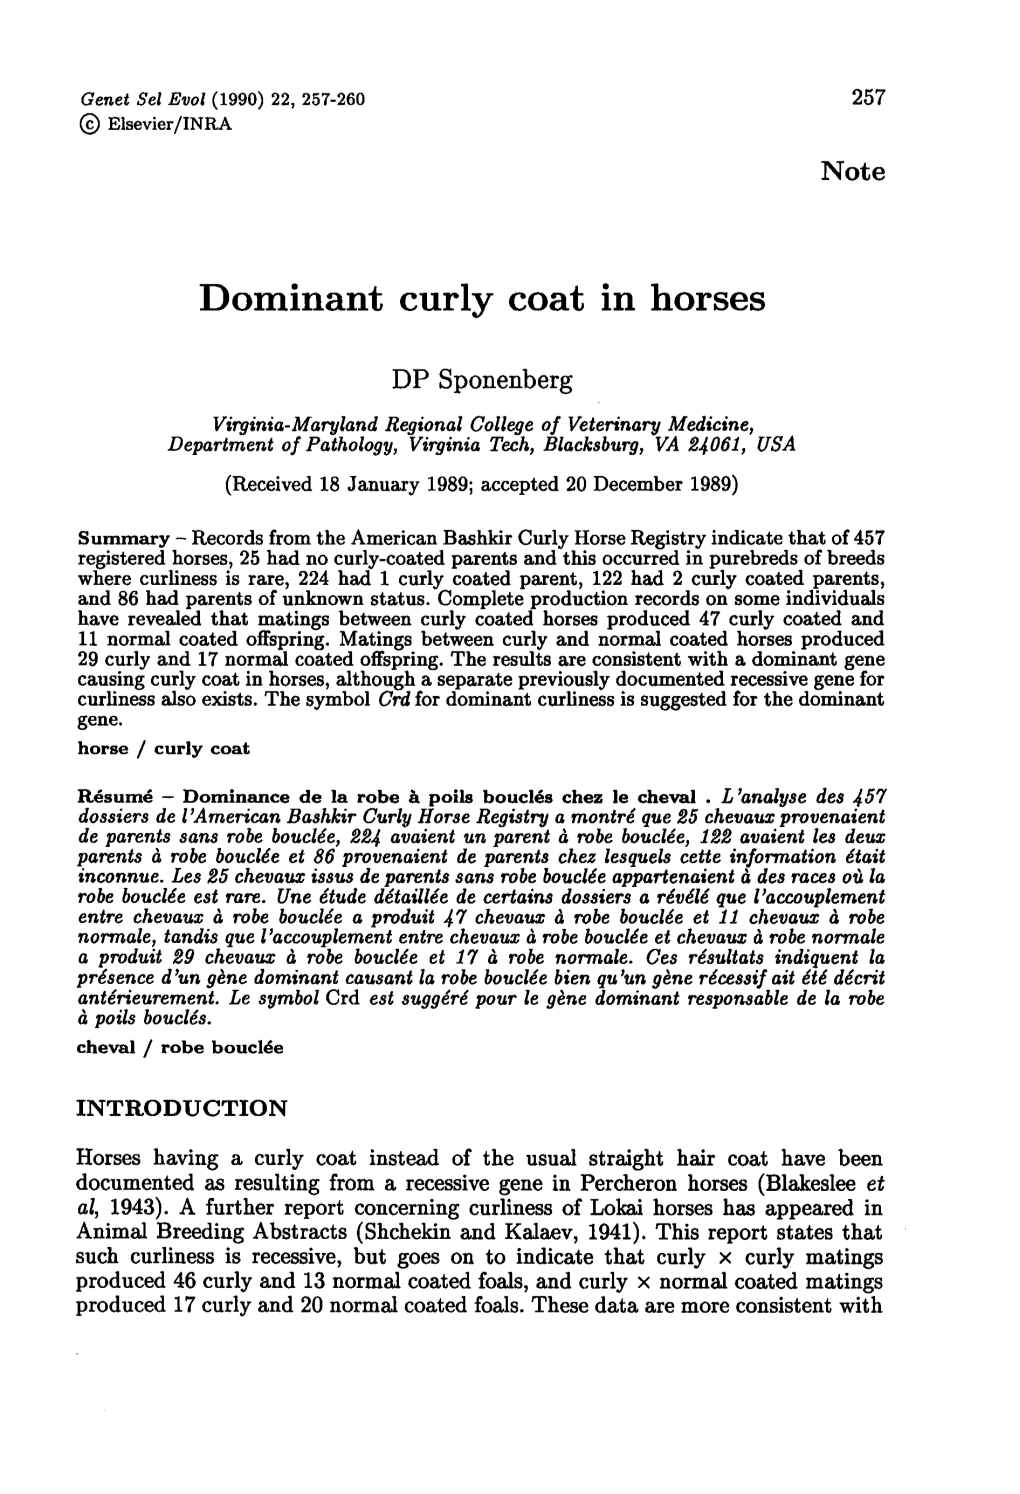 Dominant Curly Coat in Horses